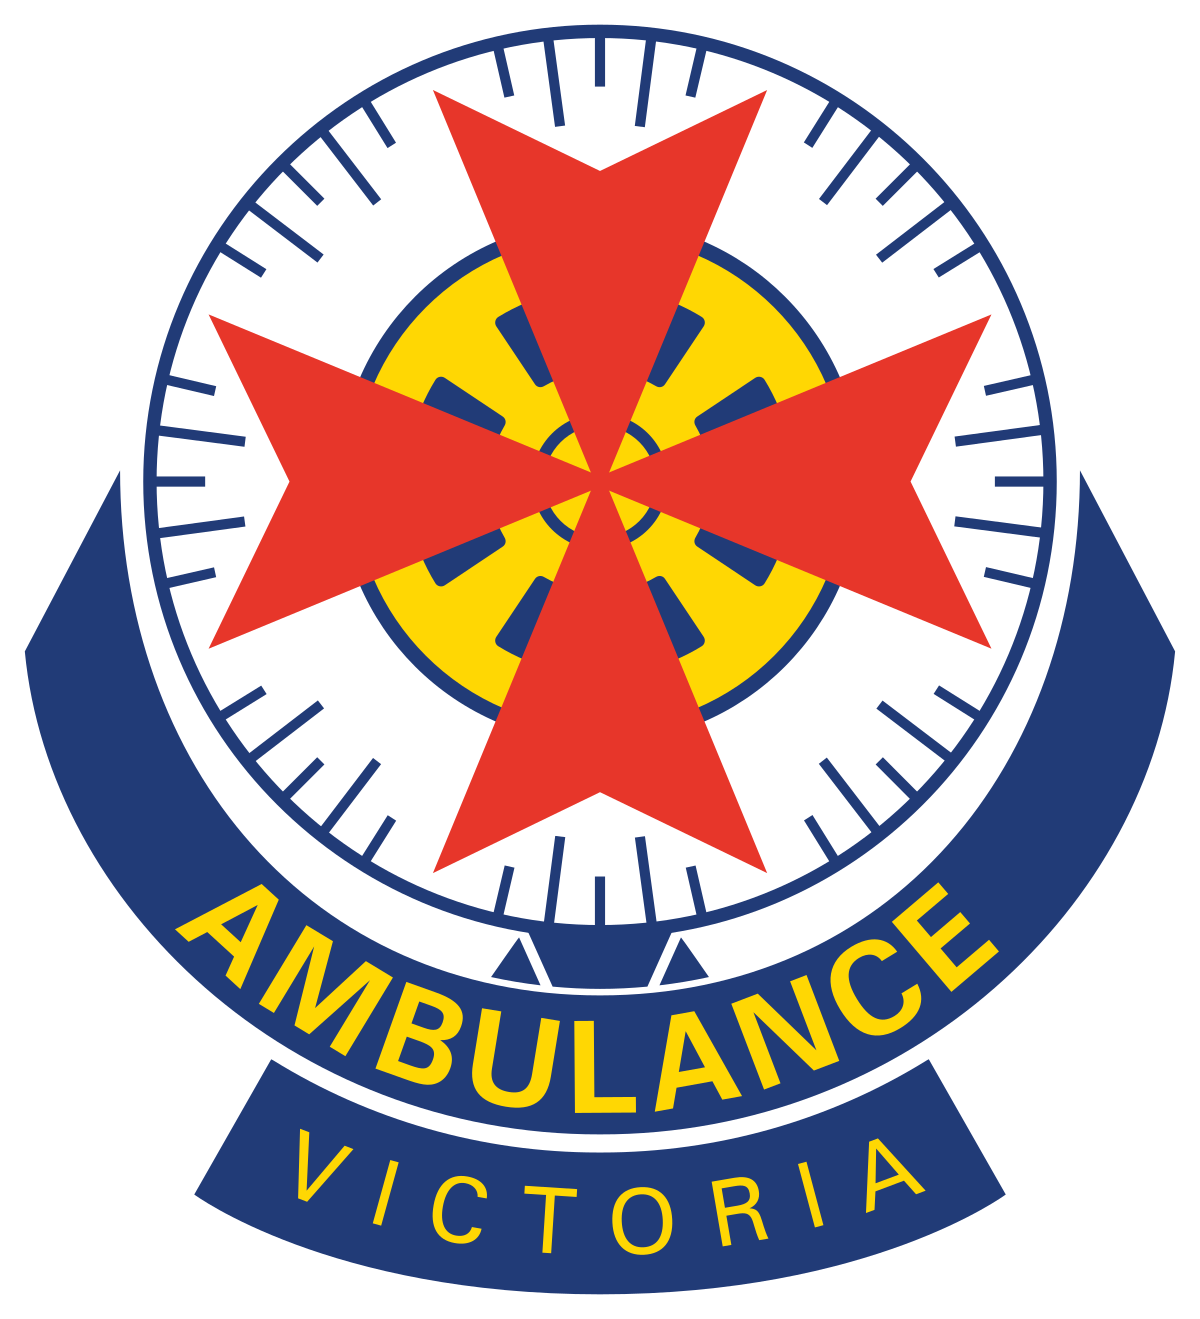 Ambulance Victoria - Wikipedia